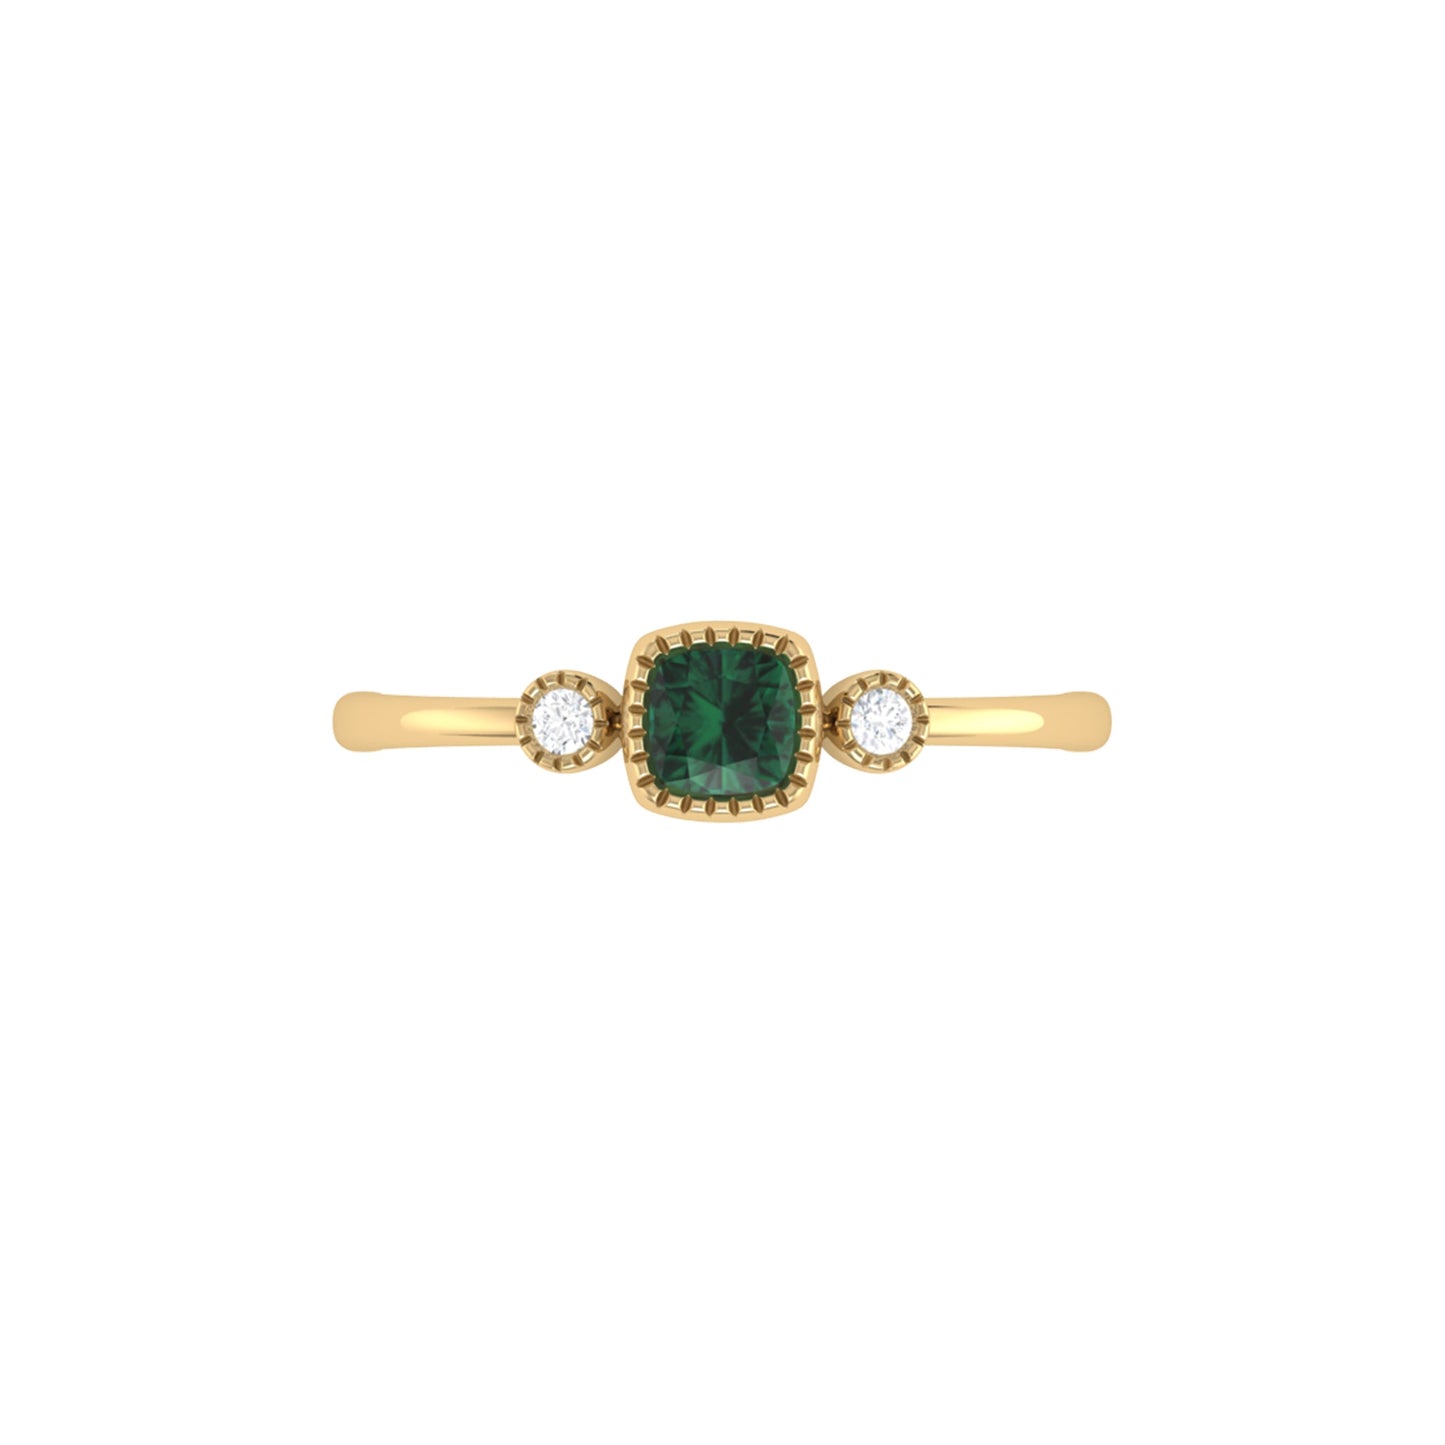 Cushion Cut Emerald & Diamond Birthstone Ring In 14K Yellow Gold by LuvMyJewelry